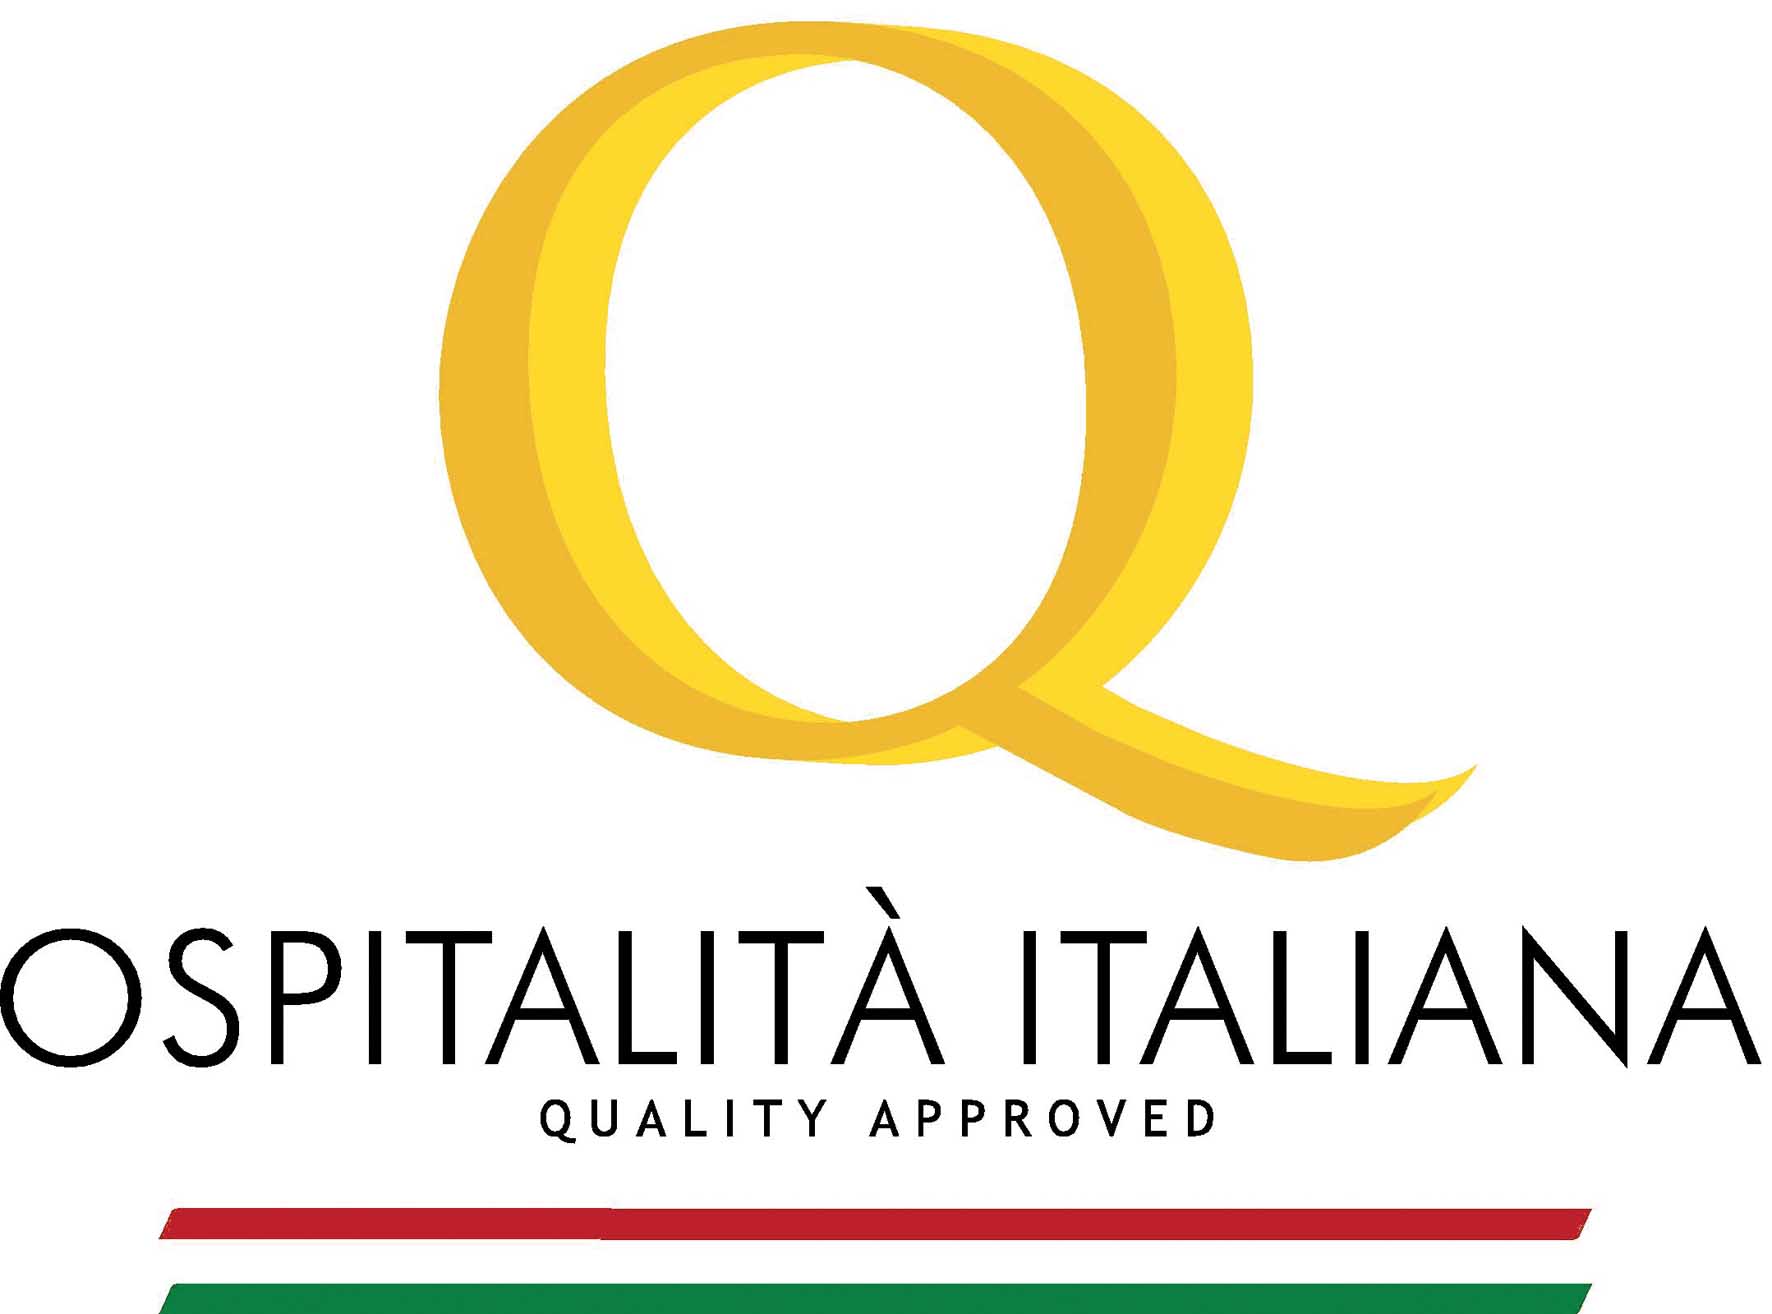 cciaa-Vr-logo-ospitalità-italiana-ilnordest